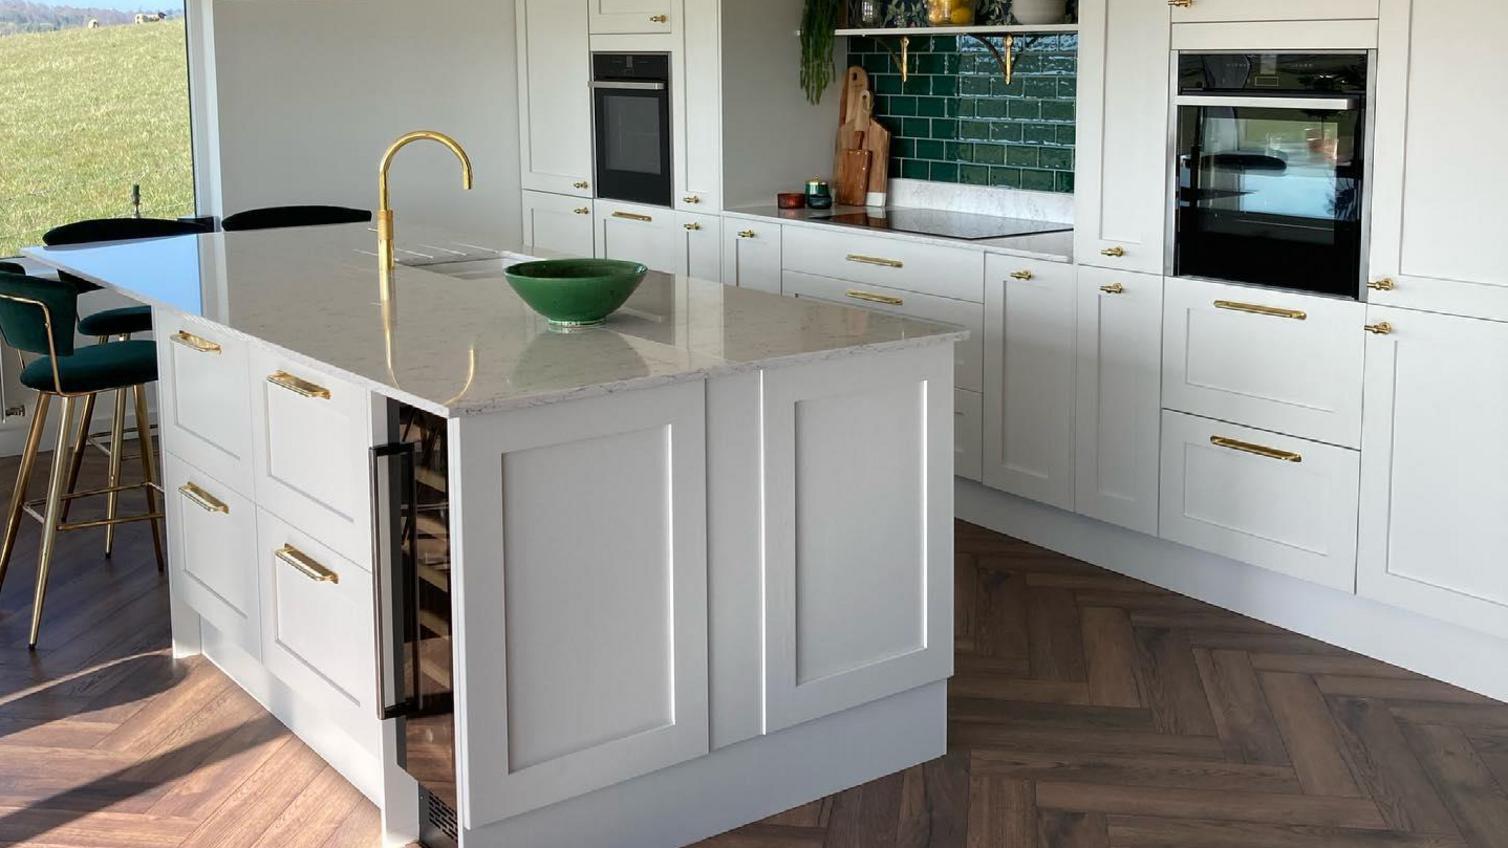 Classic shaker kitchen makeover featuring dove-grey doors, white worktops, aged-brass handles, and herringbone flooring.